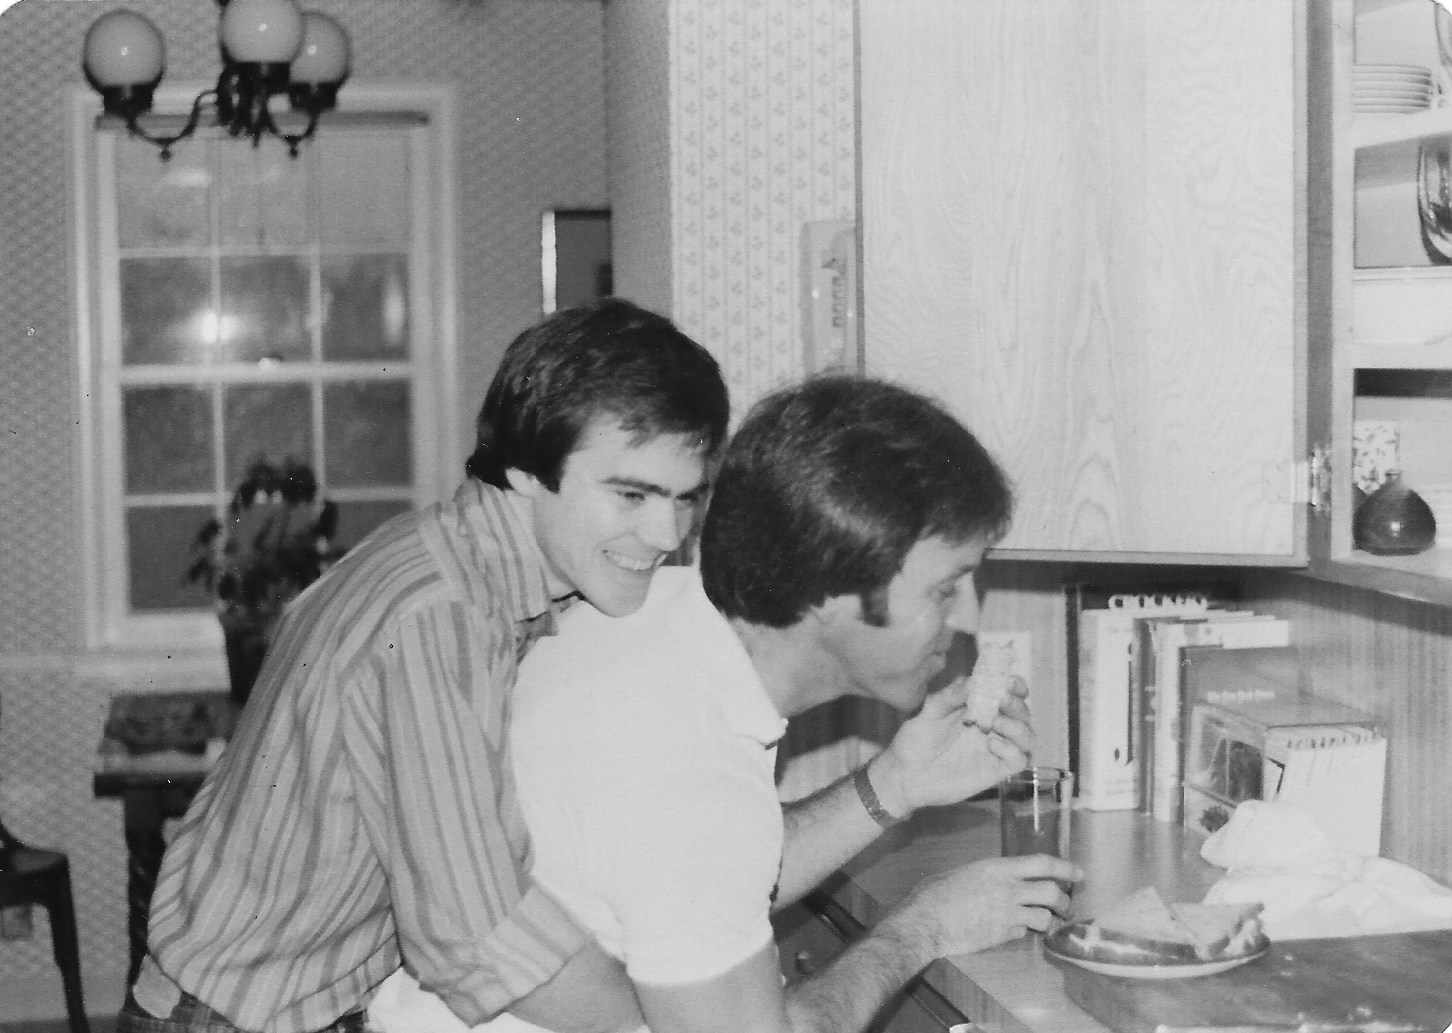 John and Jim playing, Kenilworth, 1974.